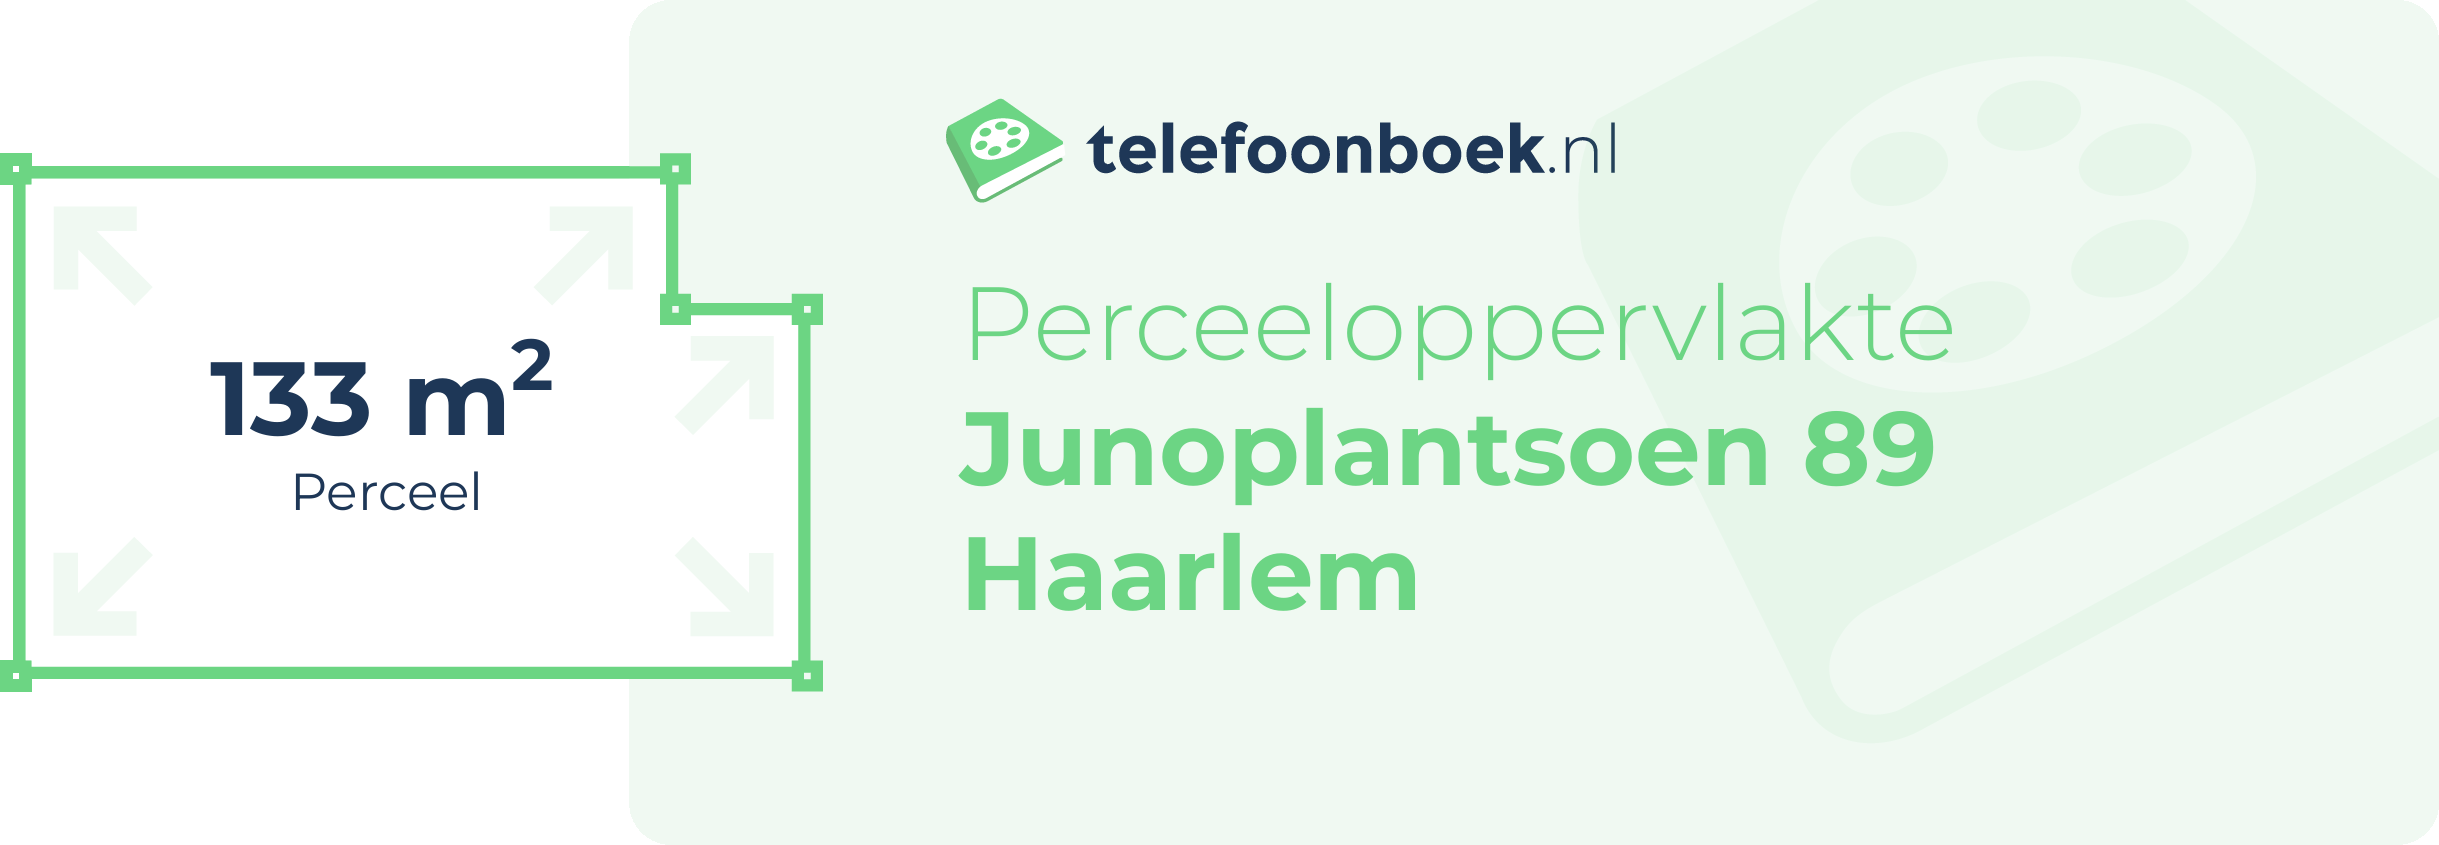 Perceeloppervlakte Junoplantsoen 89 Haarlem